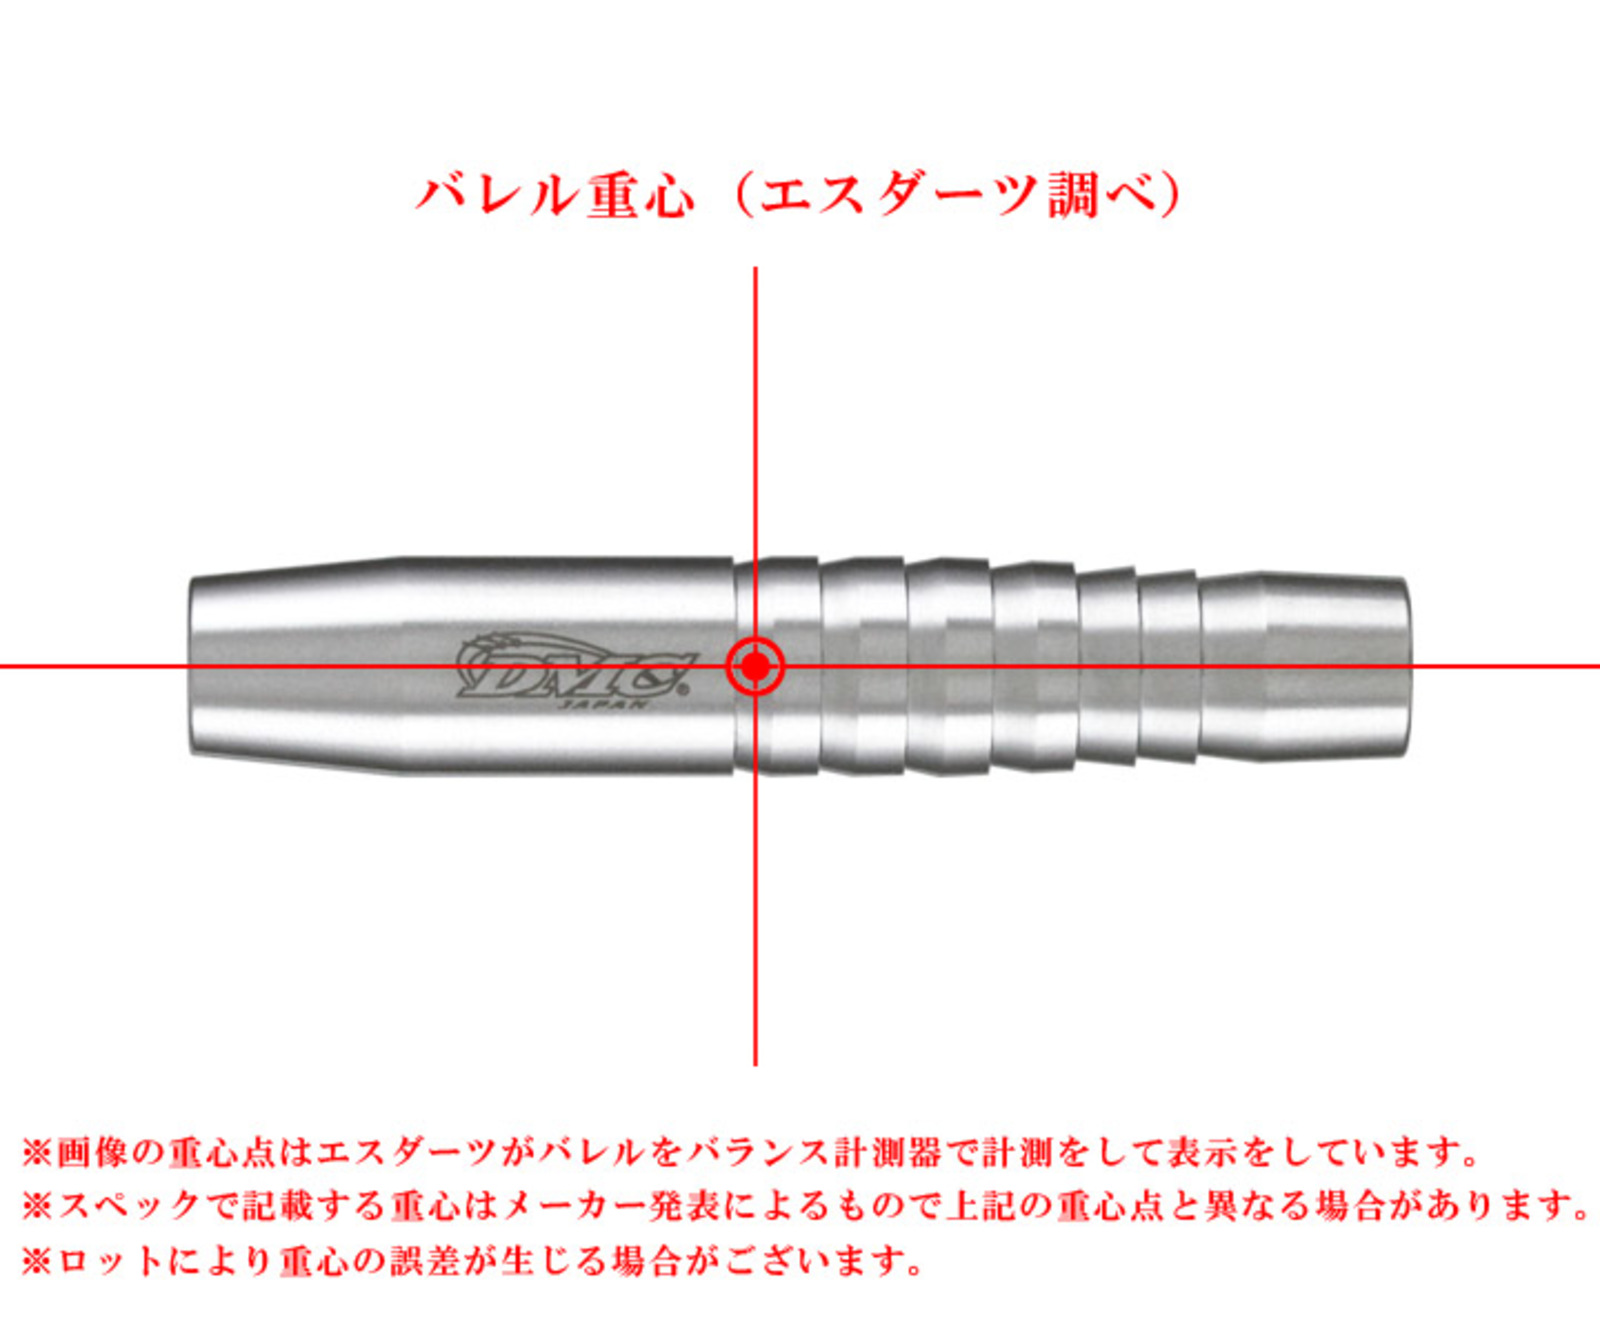 DMC】Sabre 20g | Darts Online Shop S-DARTS from JAPAN.